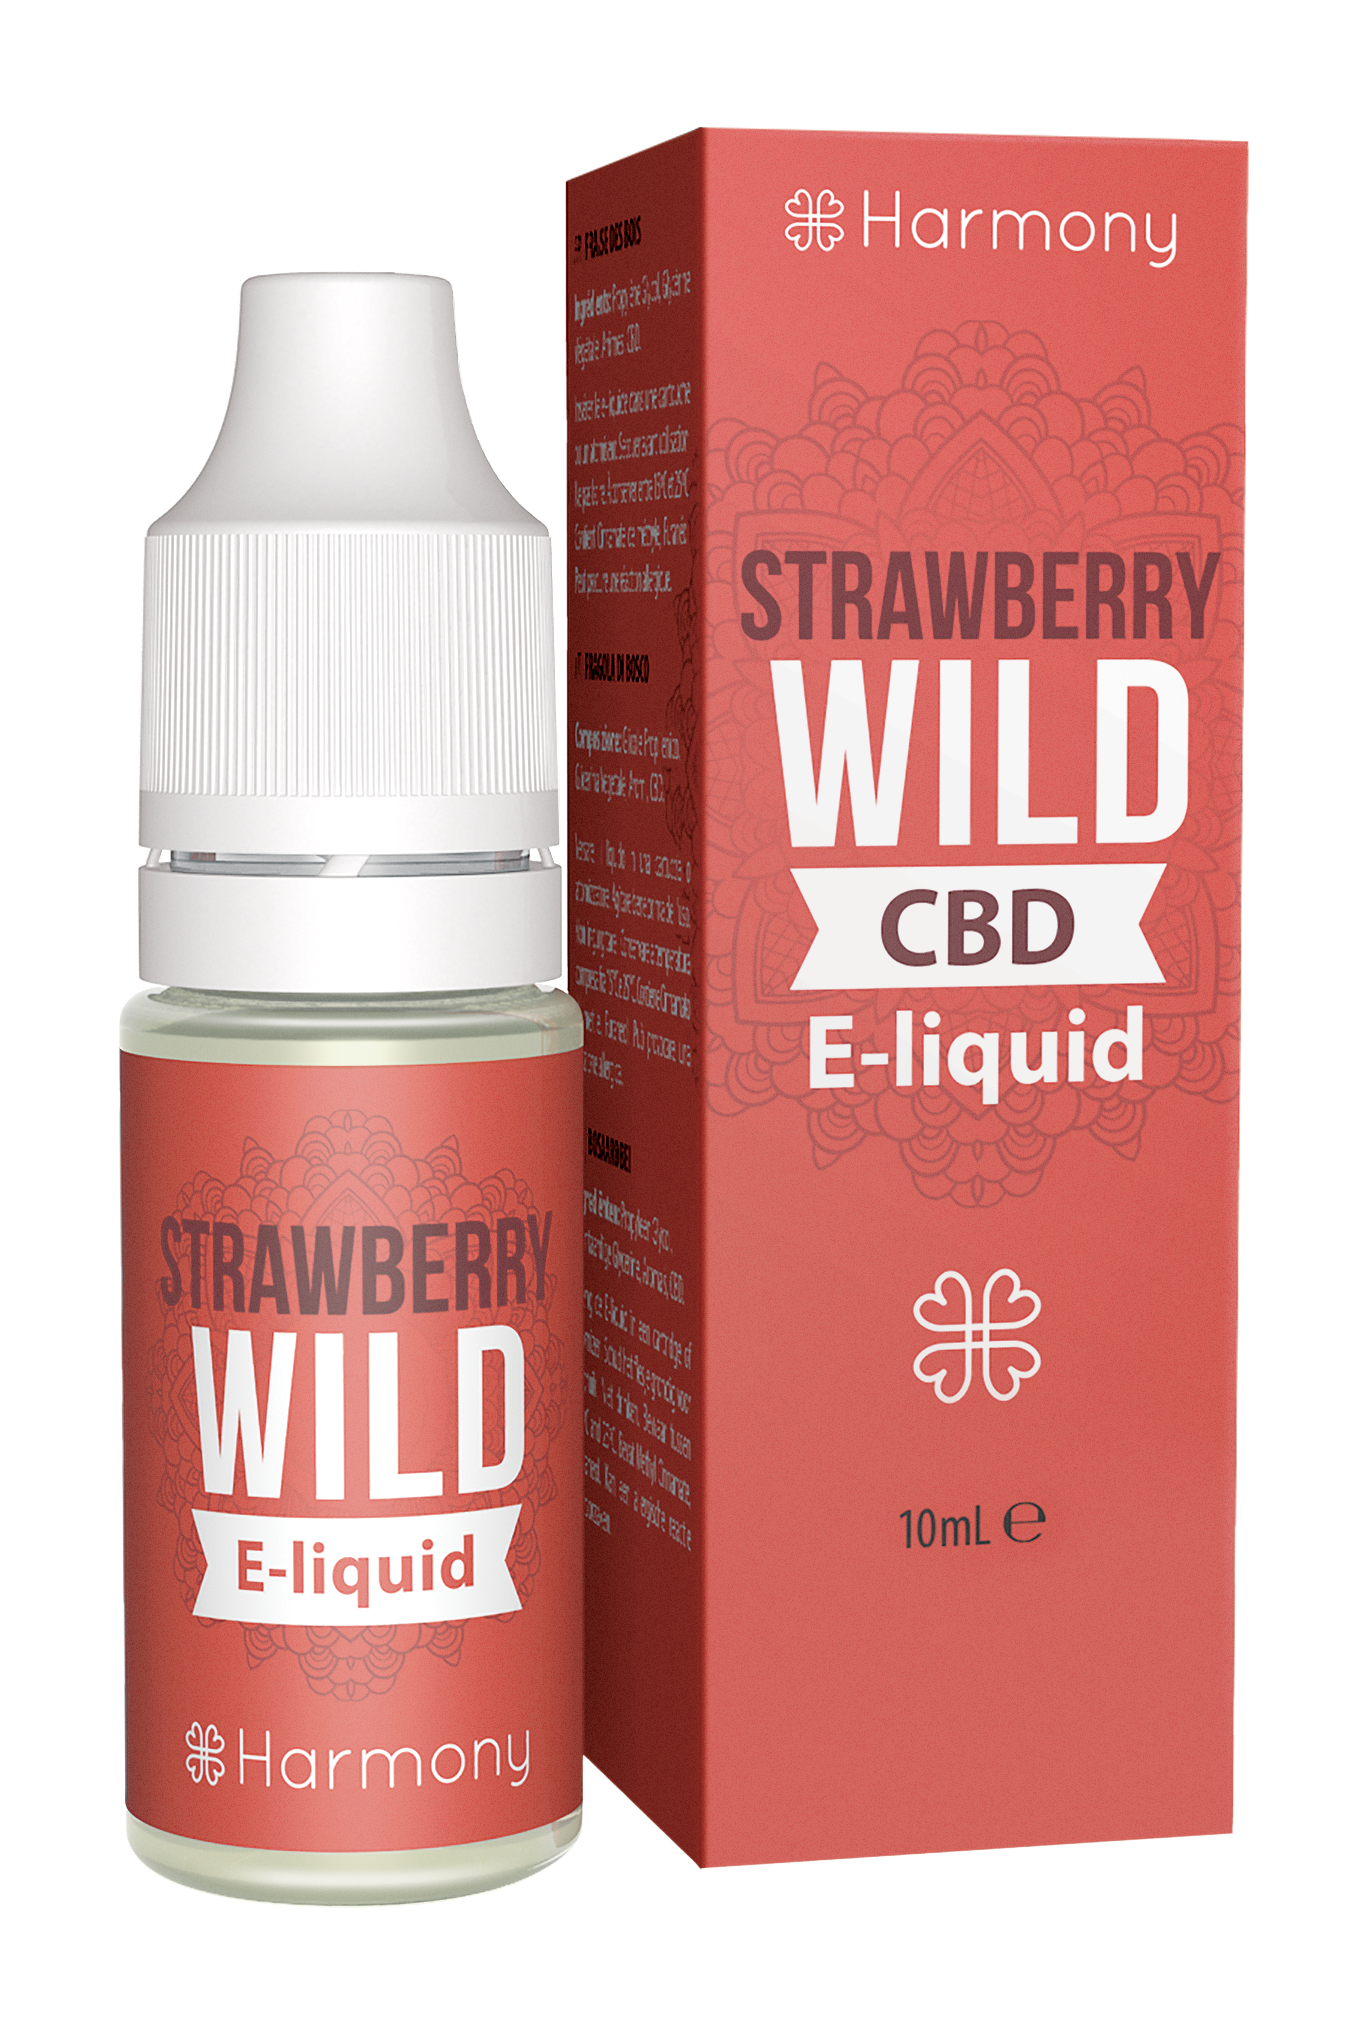 Strawberry Wild CBD E-liquid 10ml 100mg